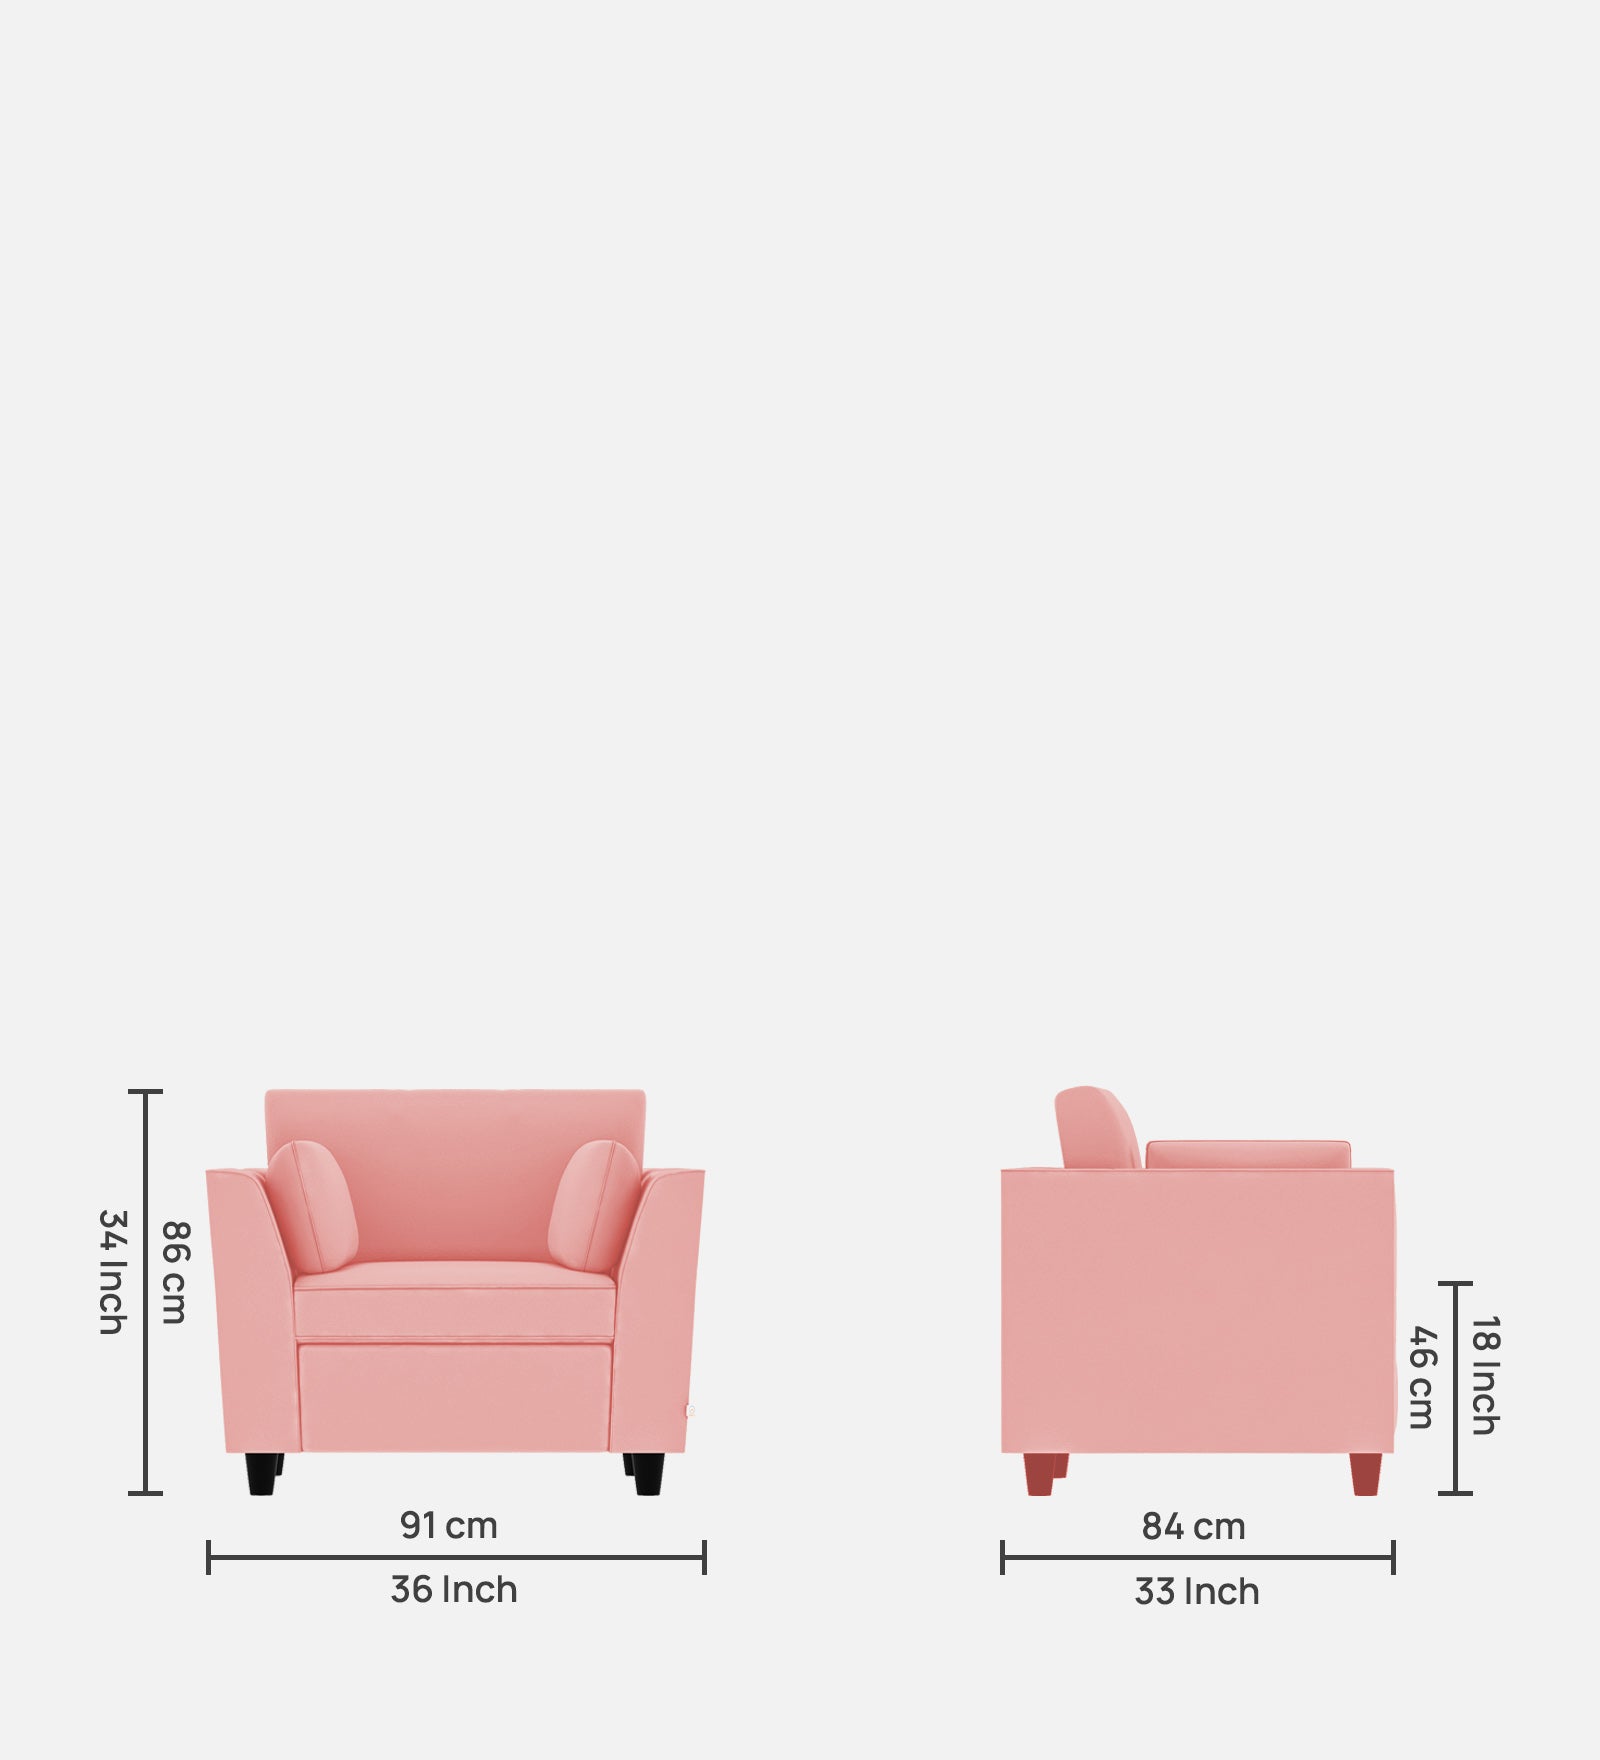 Bristo Velvet 1 Seater Sofa in Millennial Pink Colour With Storage